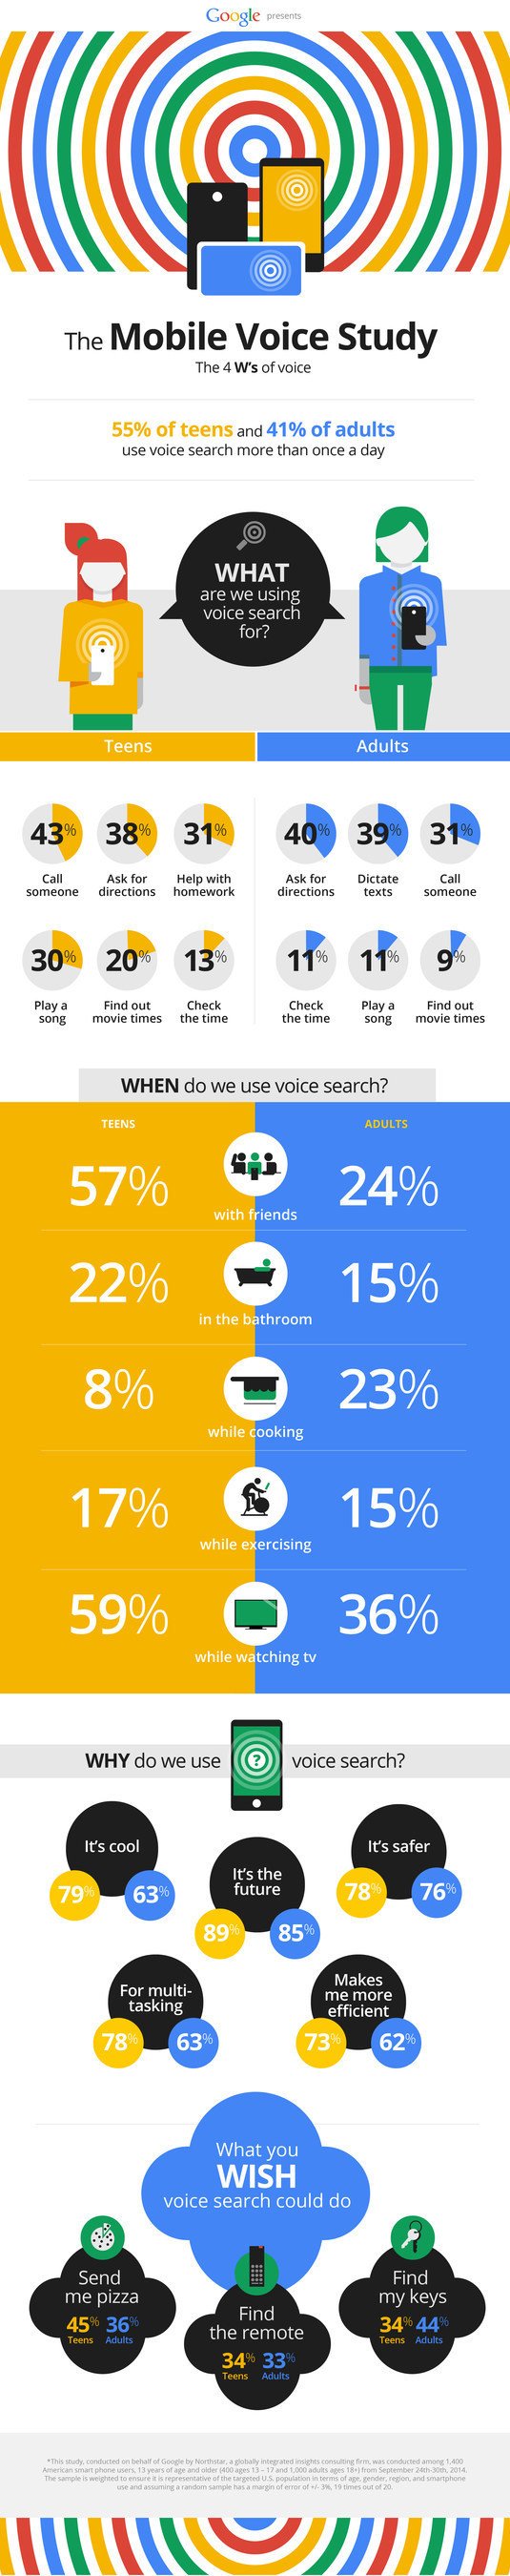 Google Mobile Voice Study Infographic